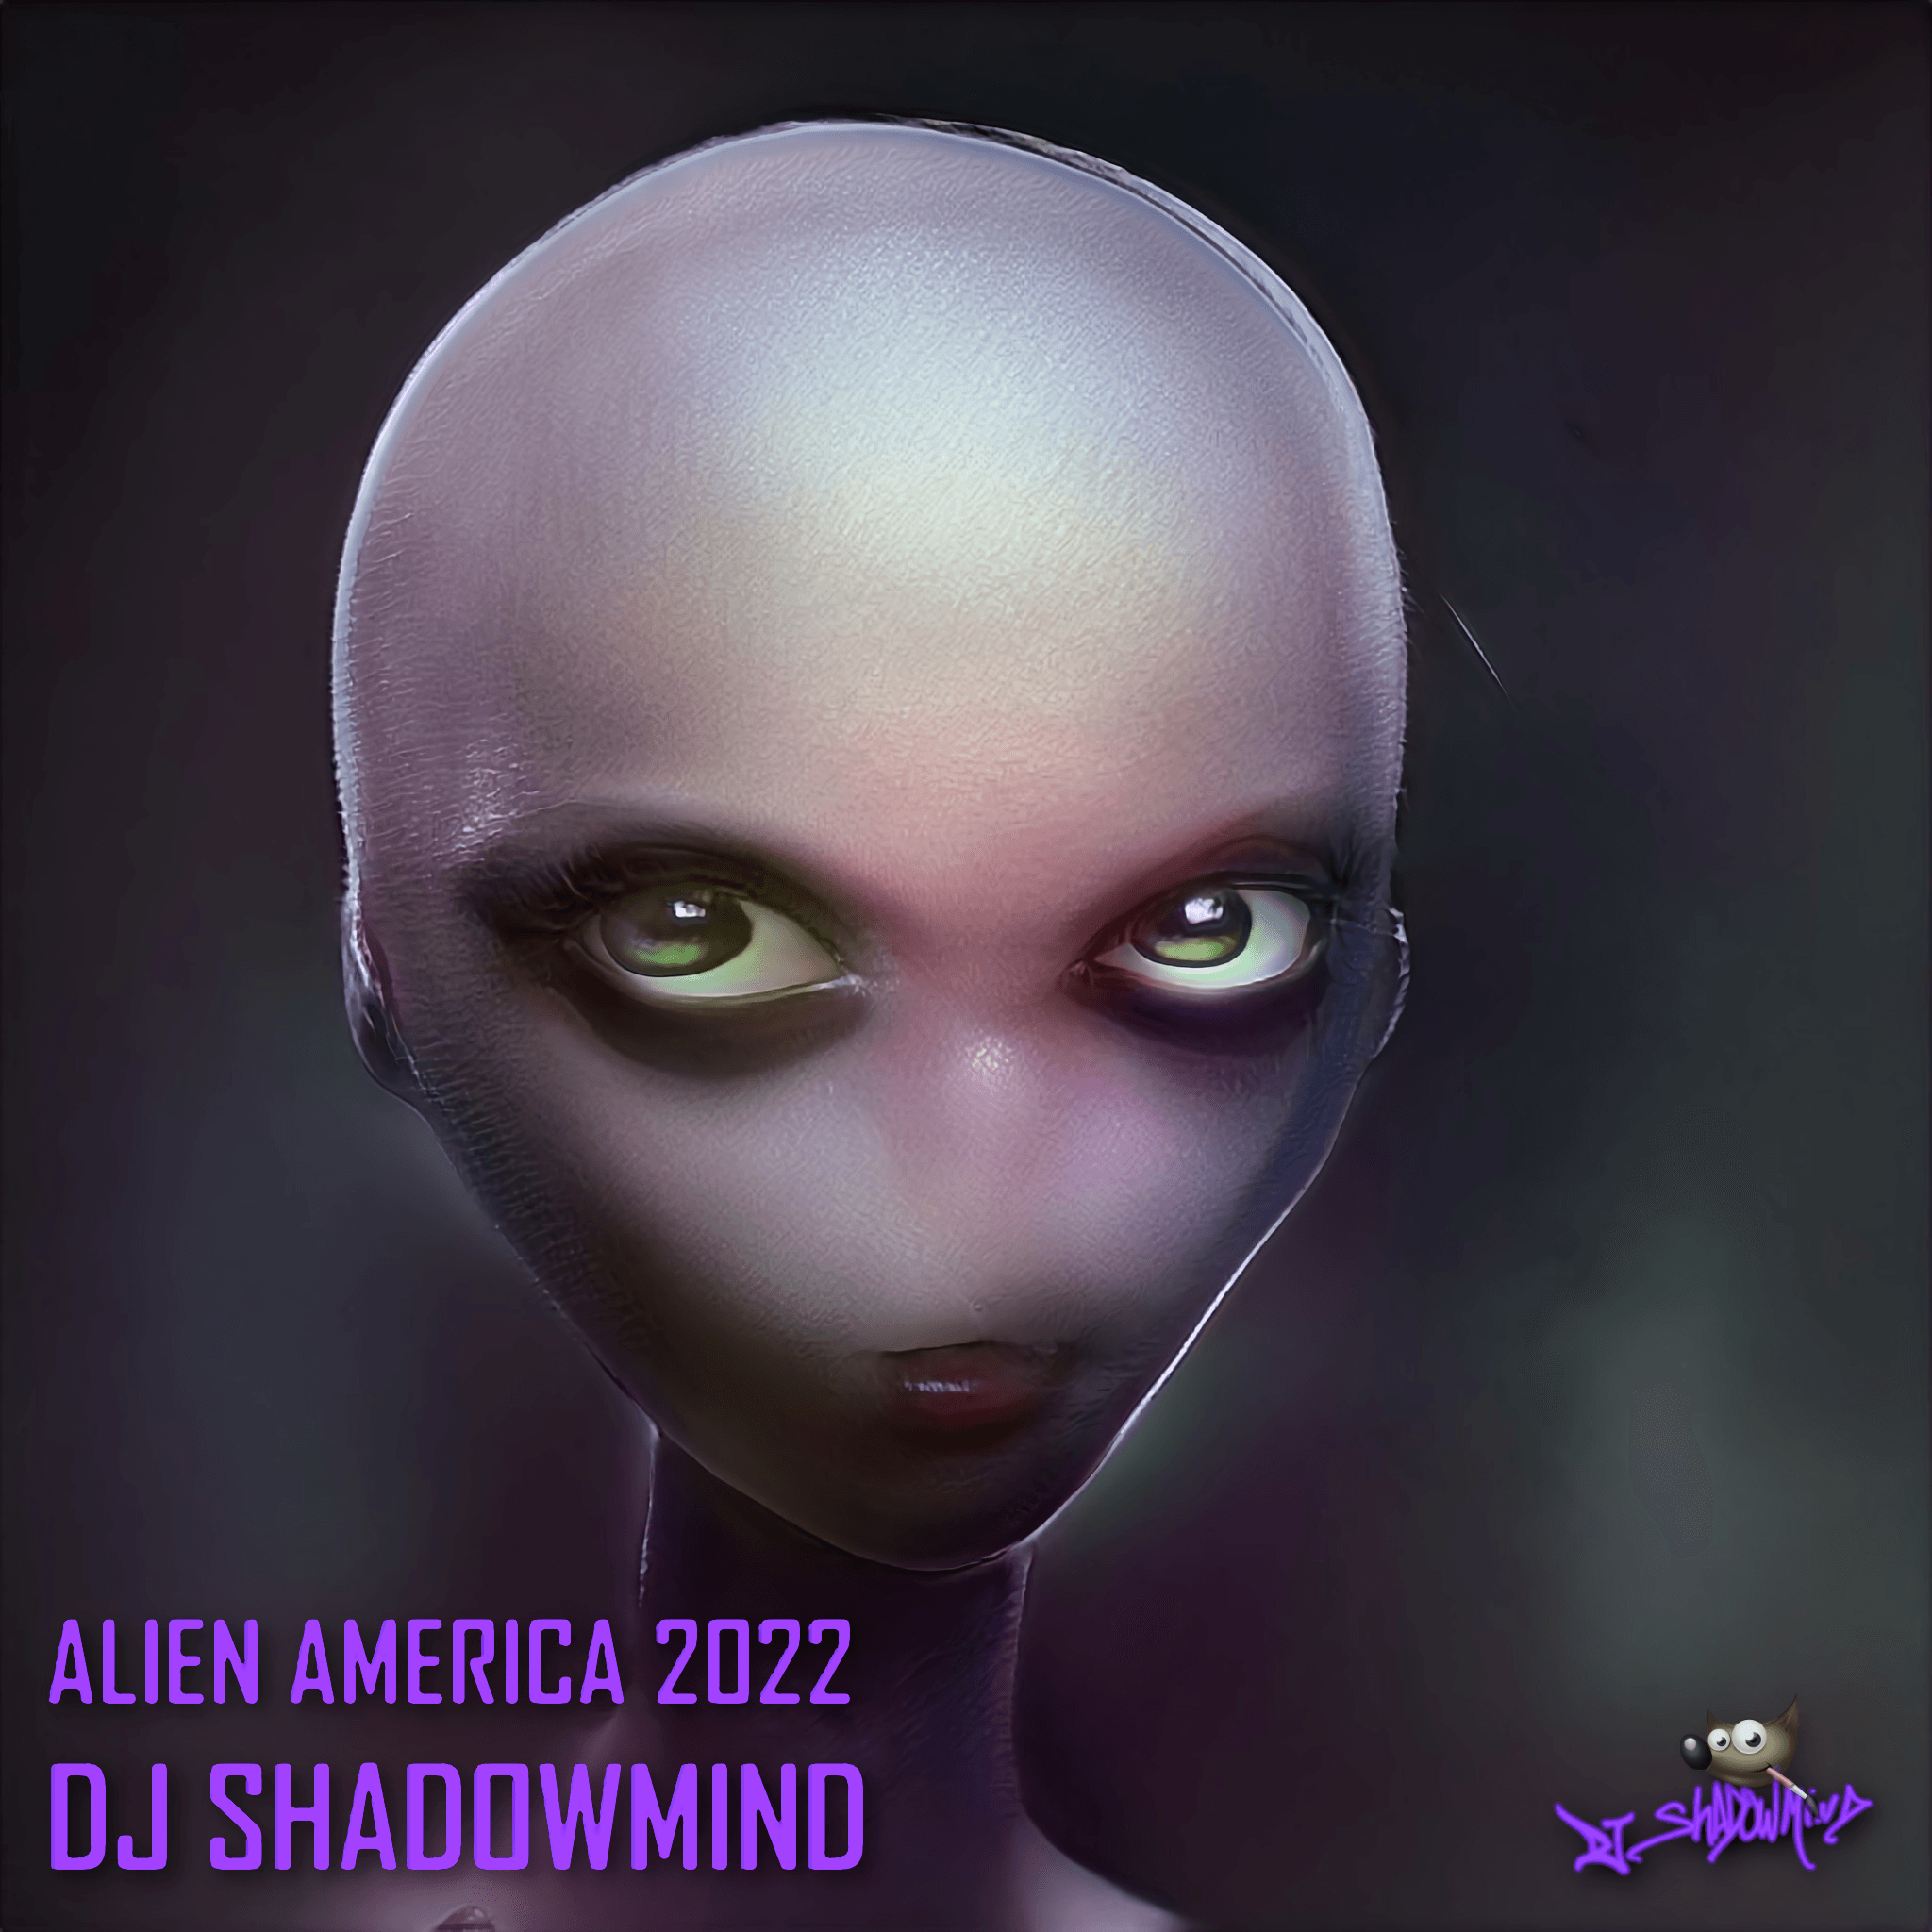 Alien America 2022 - Agent 016